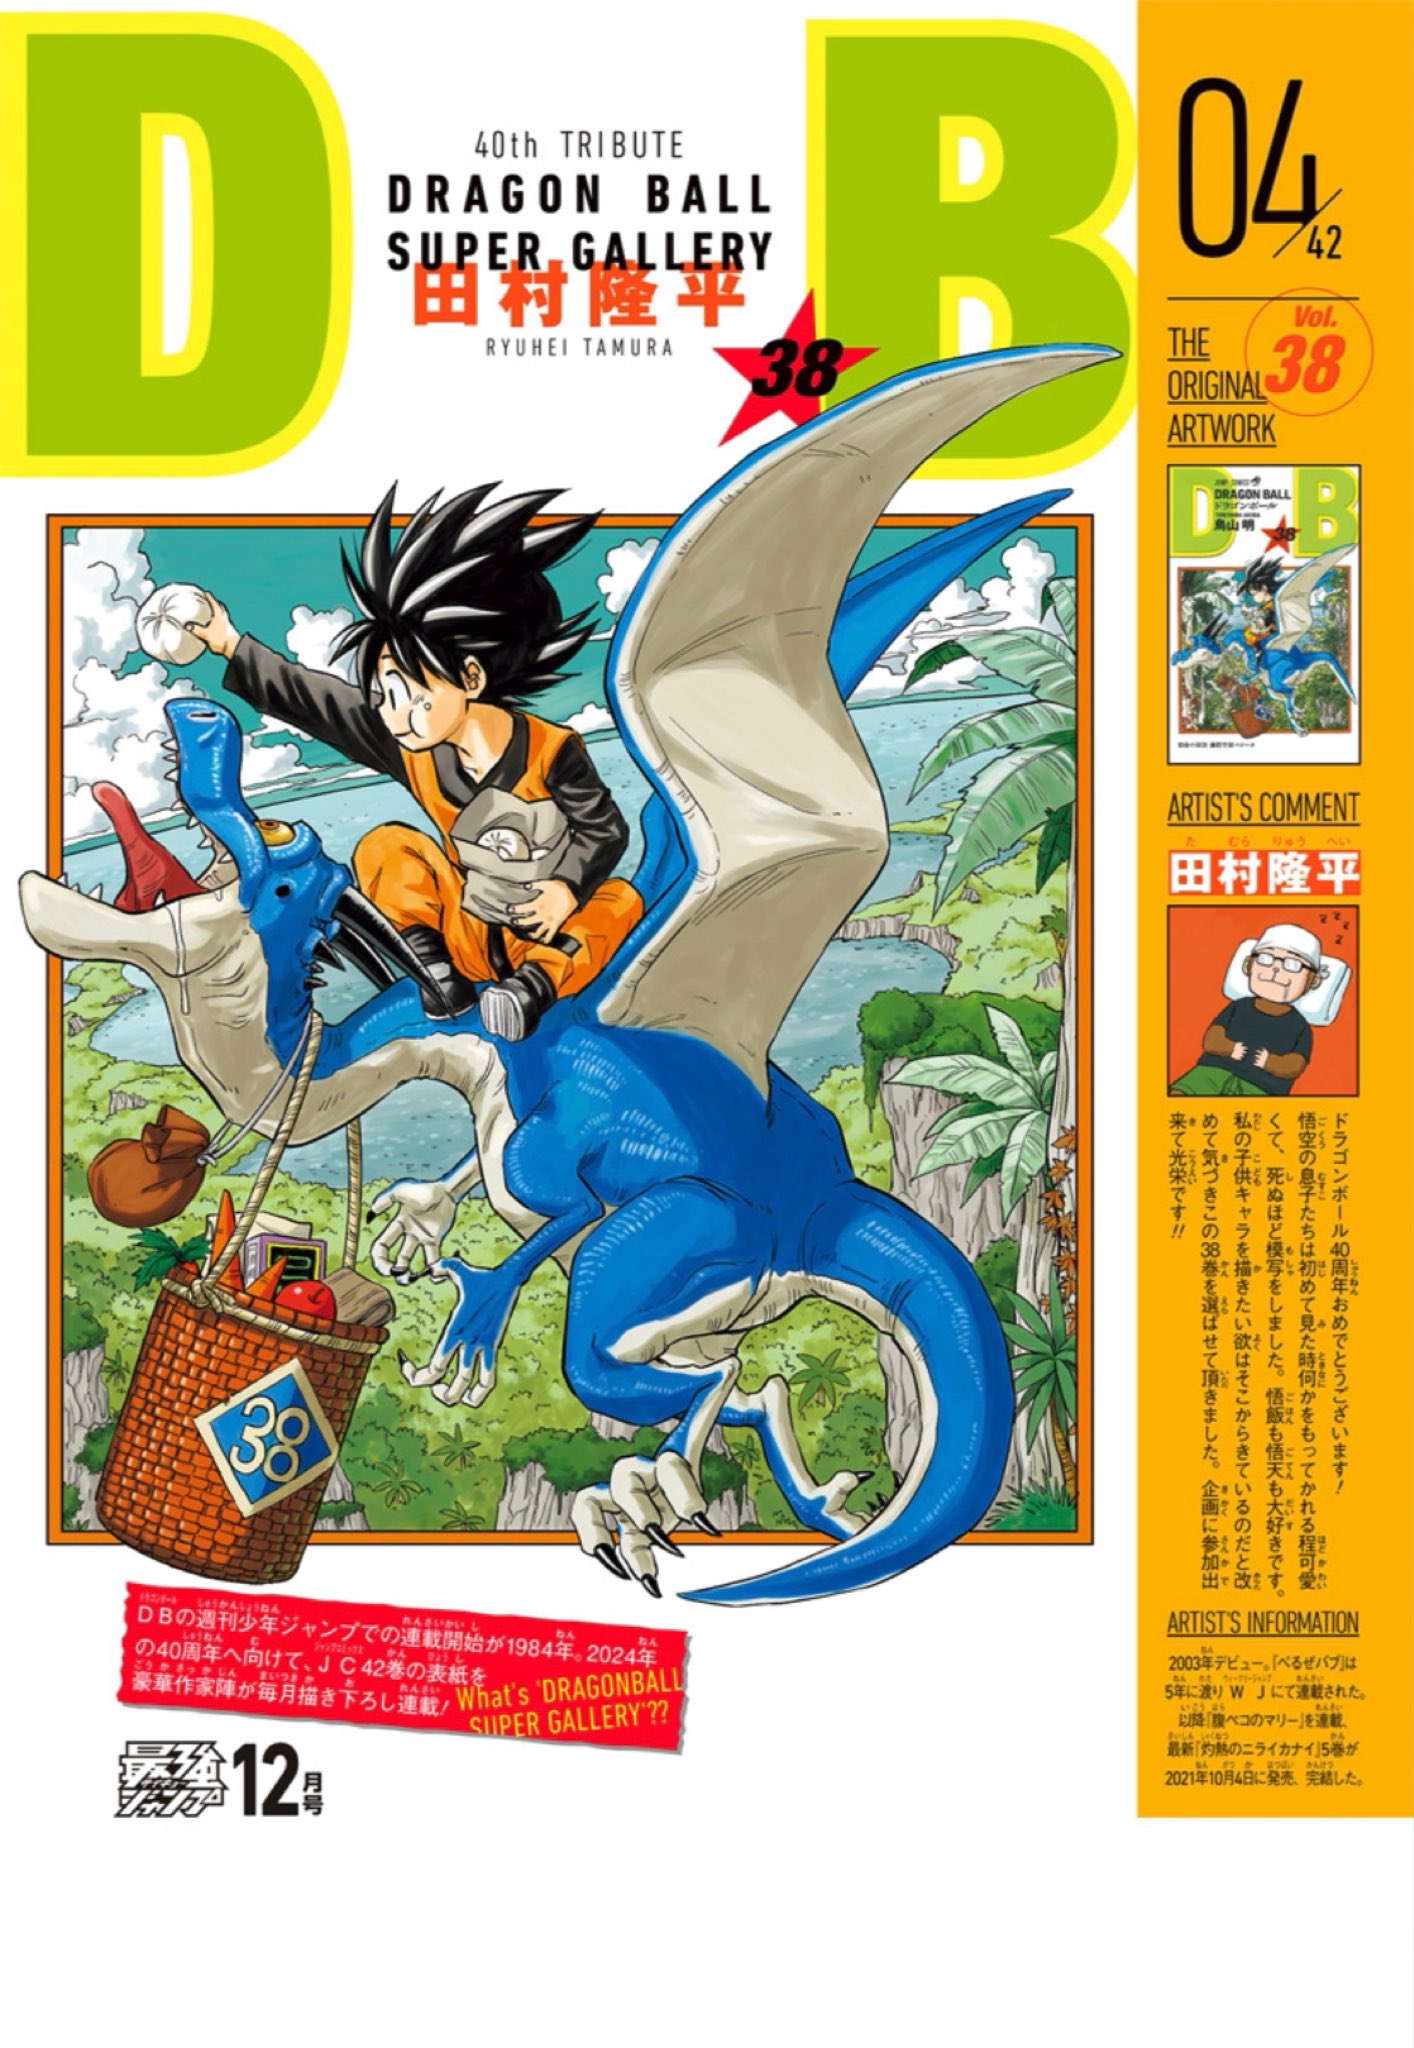 DRAGON BALL SUPER GALLERY : Ryūhei Tamura (Beelzebub) dessine la couverture du tome 38 de Dragon Ball